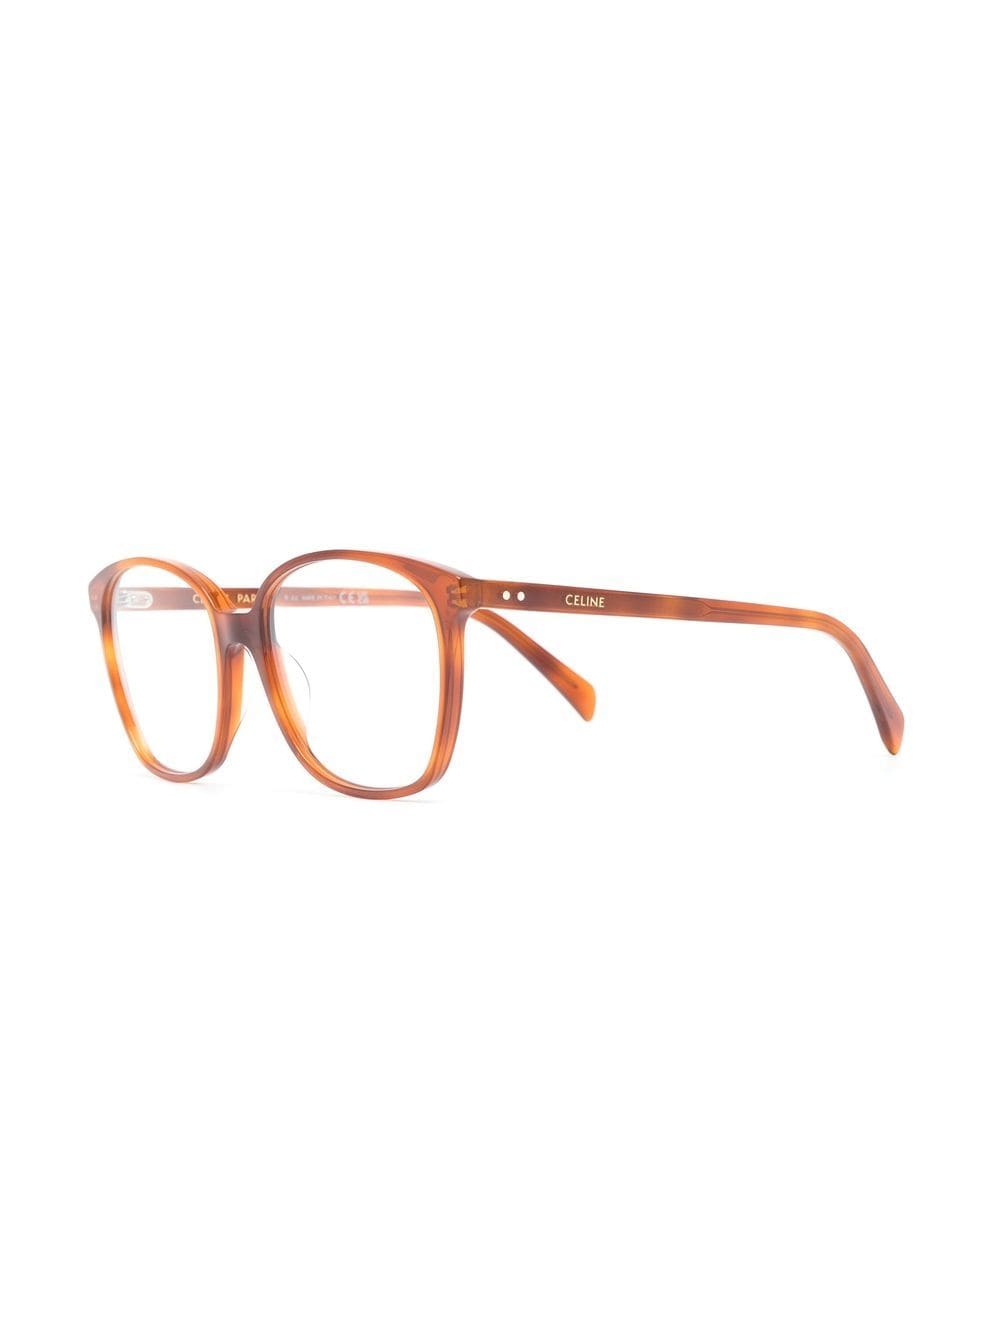 Celine Eyewear Bril met schildpadschild design - Oranje